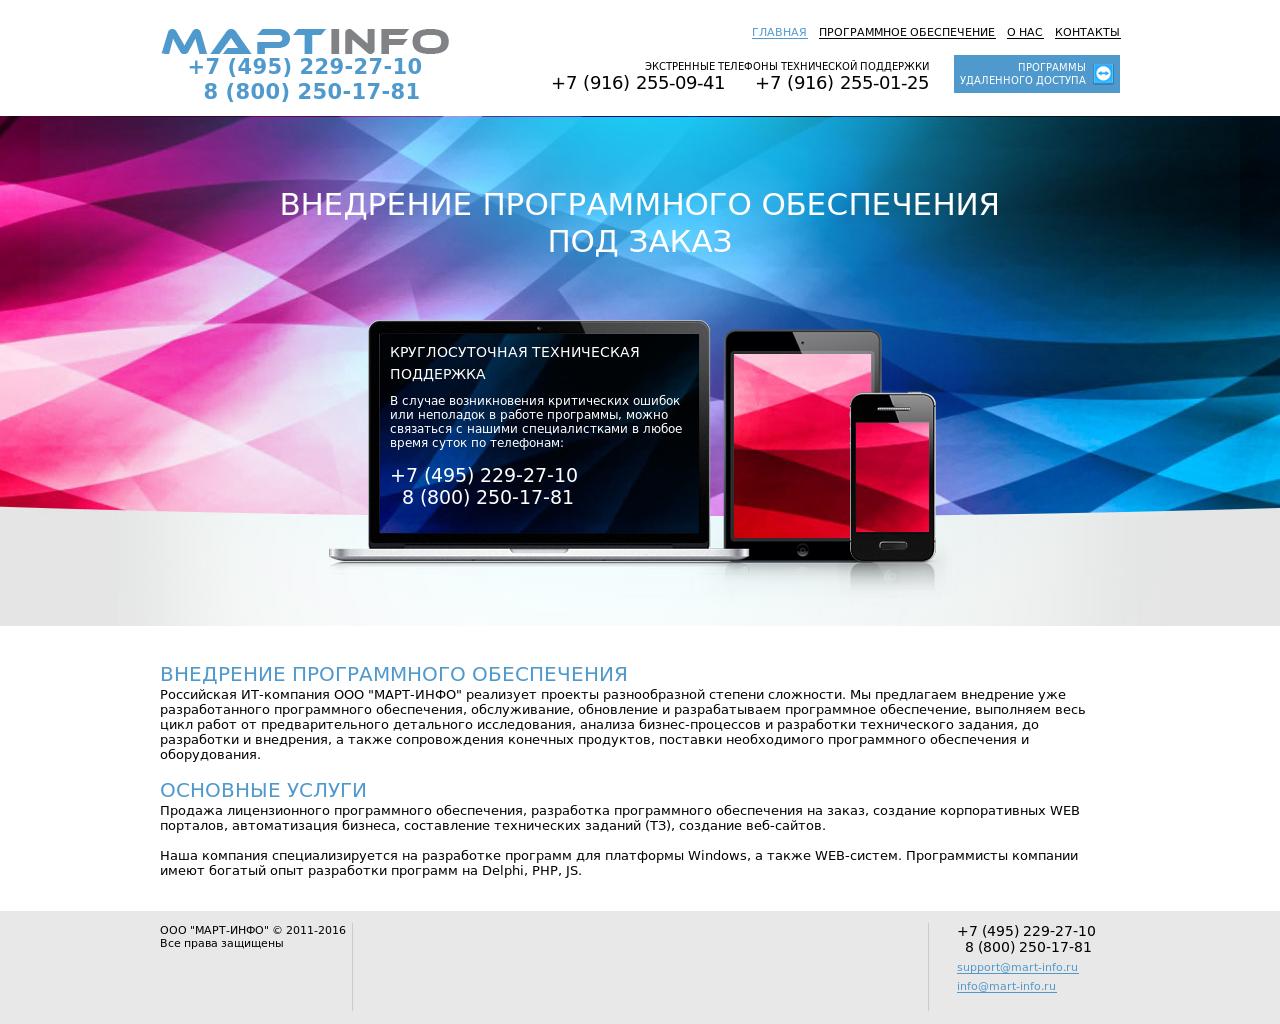 Изображение сайта mart-info.ru в разрешении 1280x1024